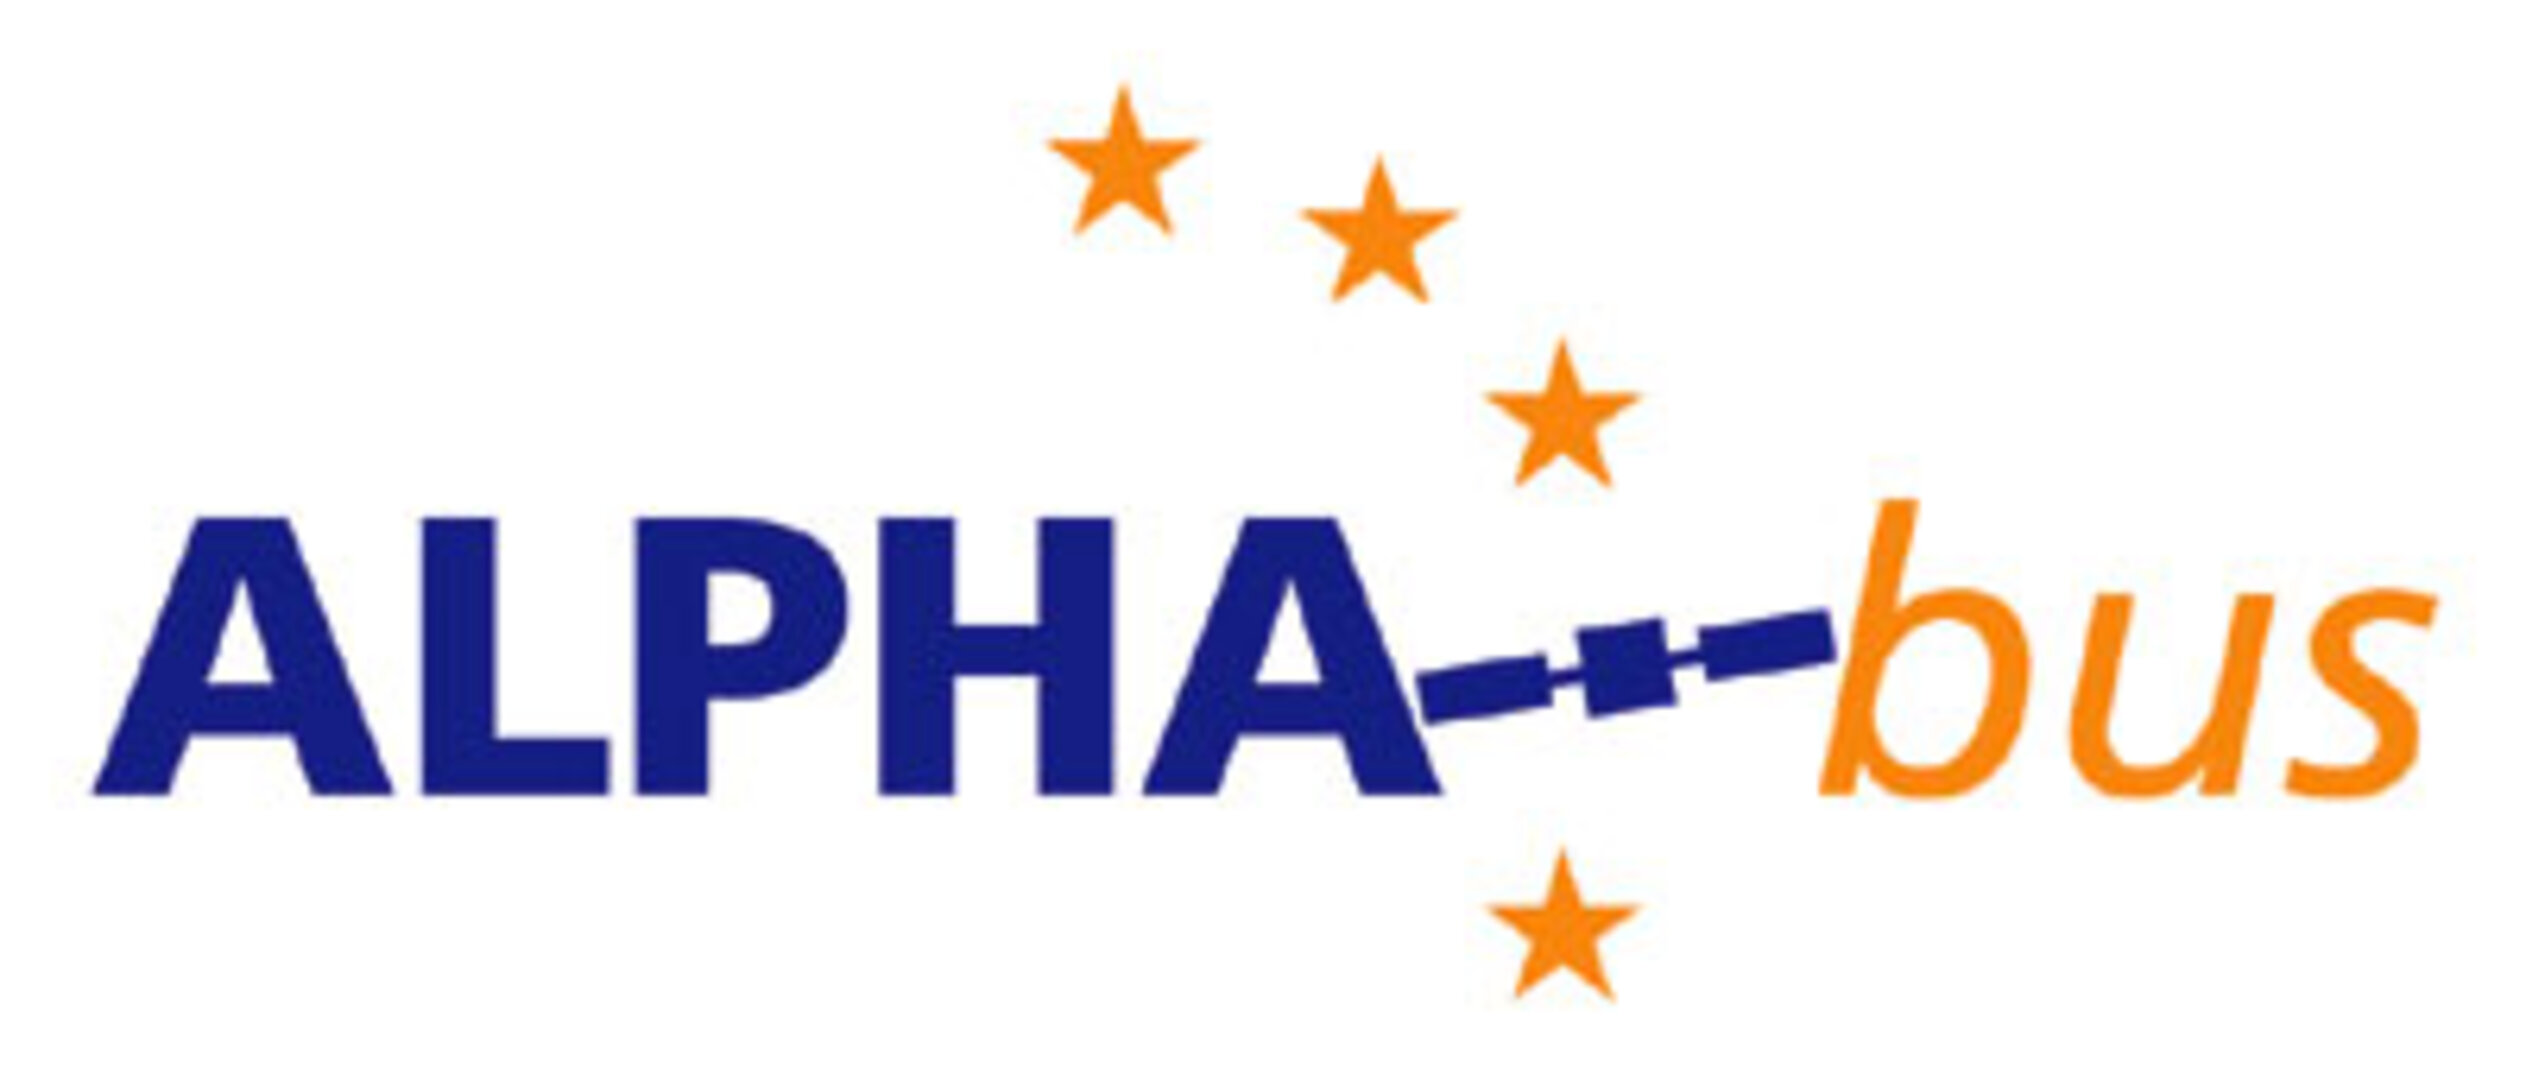 AlphaBus logo